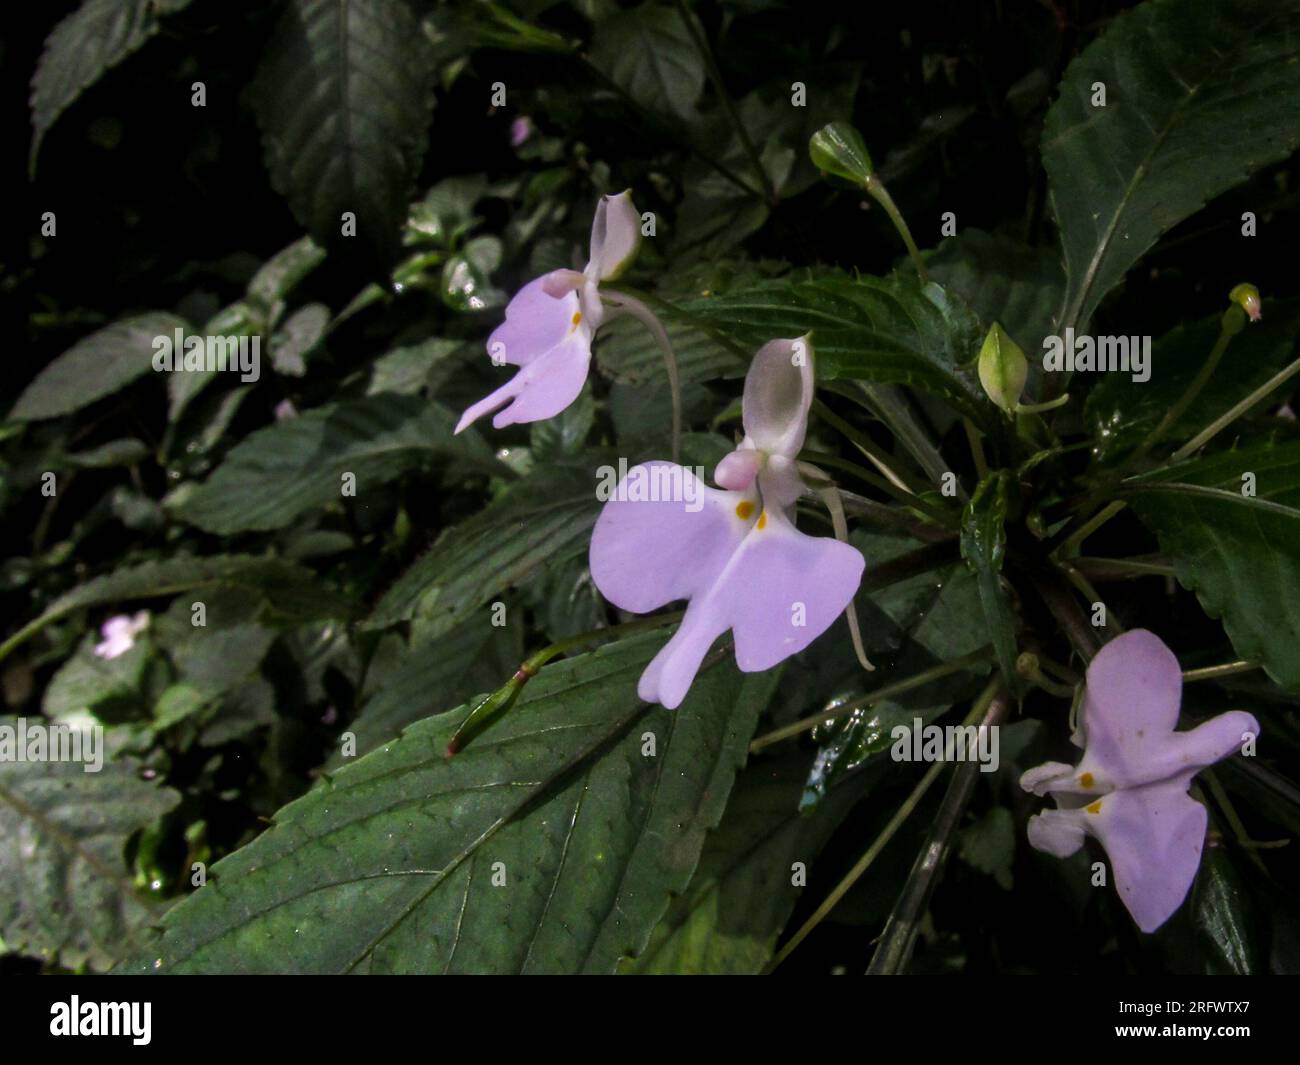 The delicate pale pink flowers of a wild impatiens, SearchImpatiens hochstetteri. Stock Photo